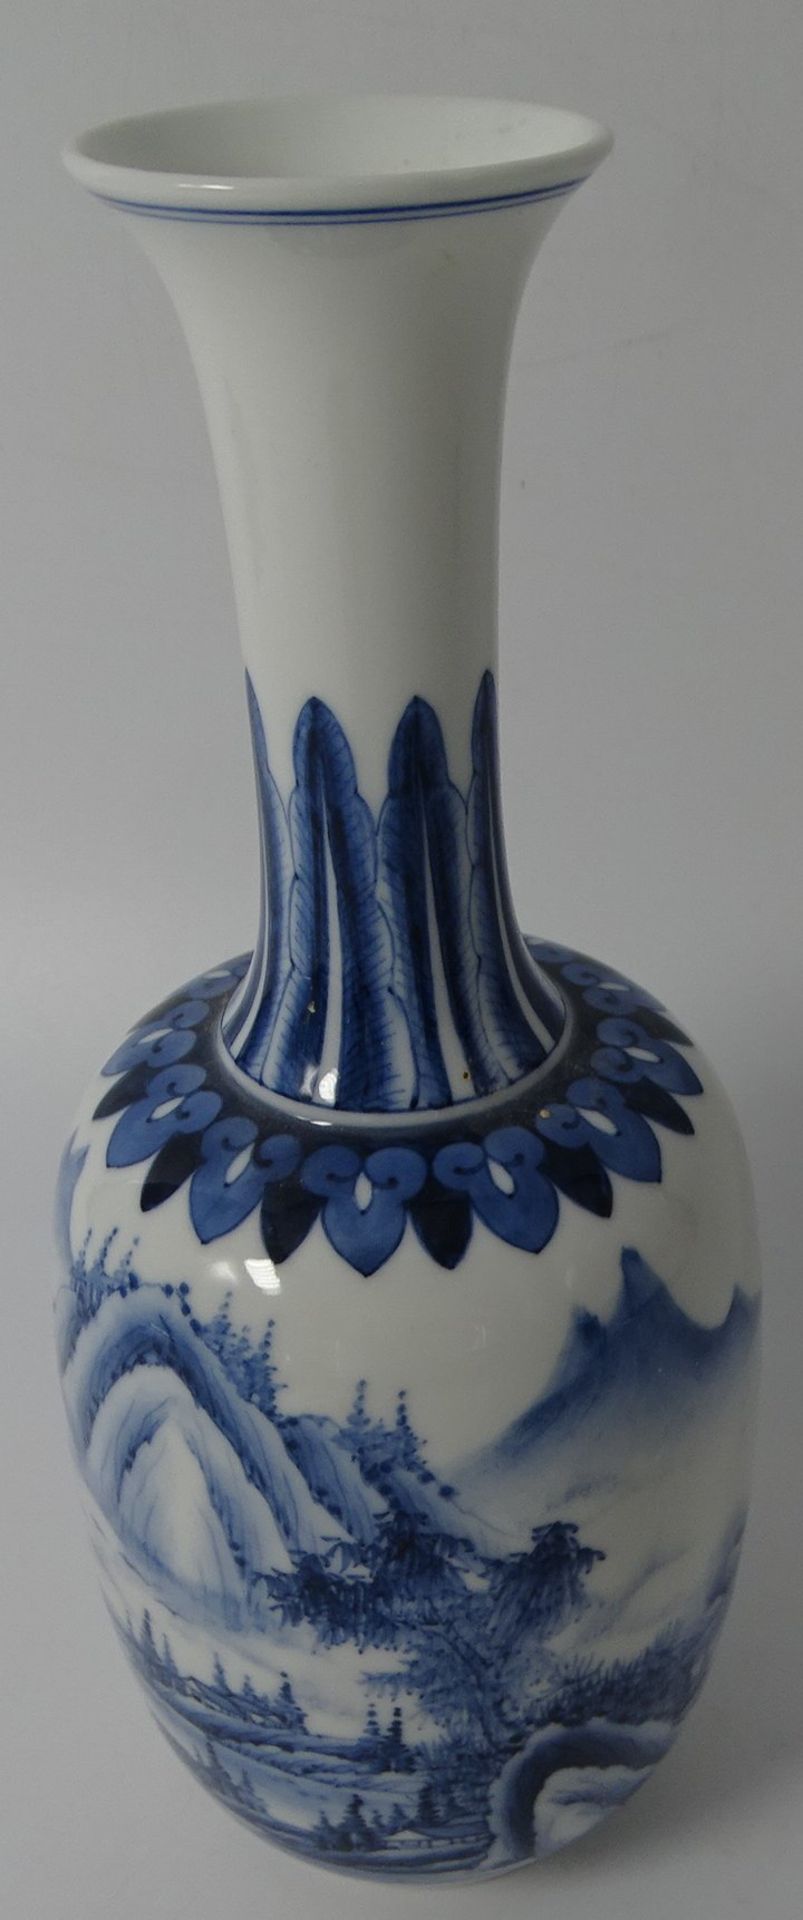 kl. China-Vase, Blaumalerei, H-20 cm - Bild 3 aus 4